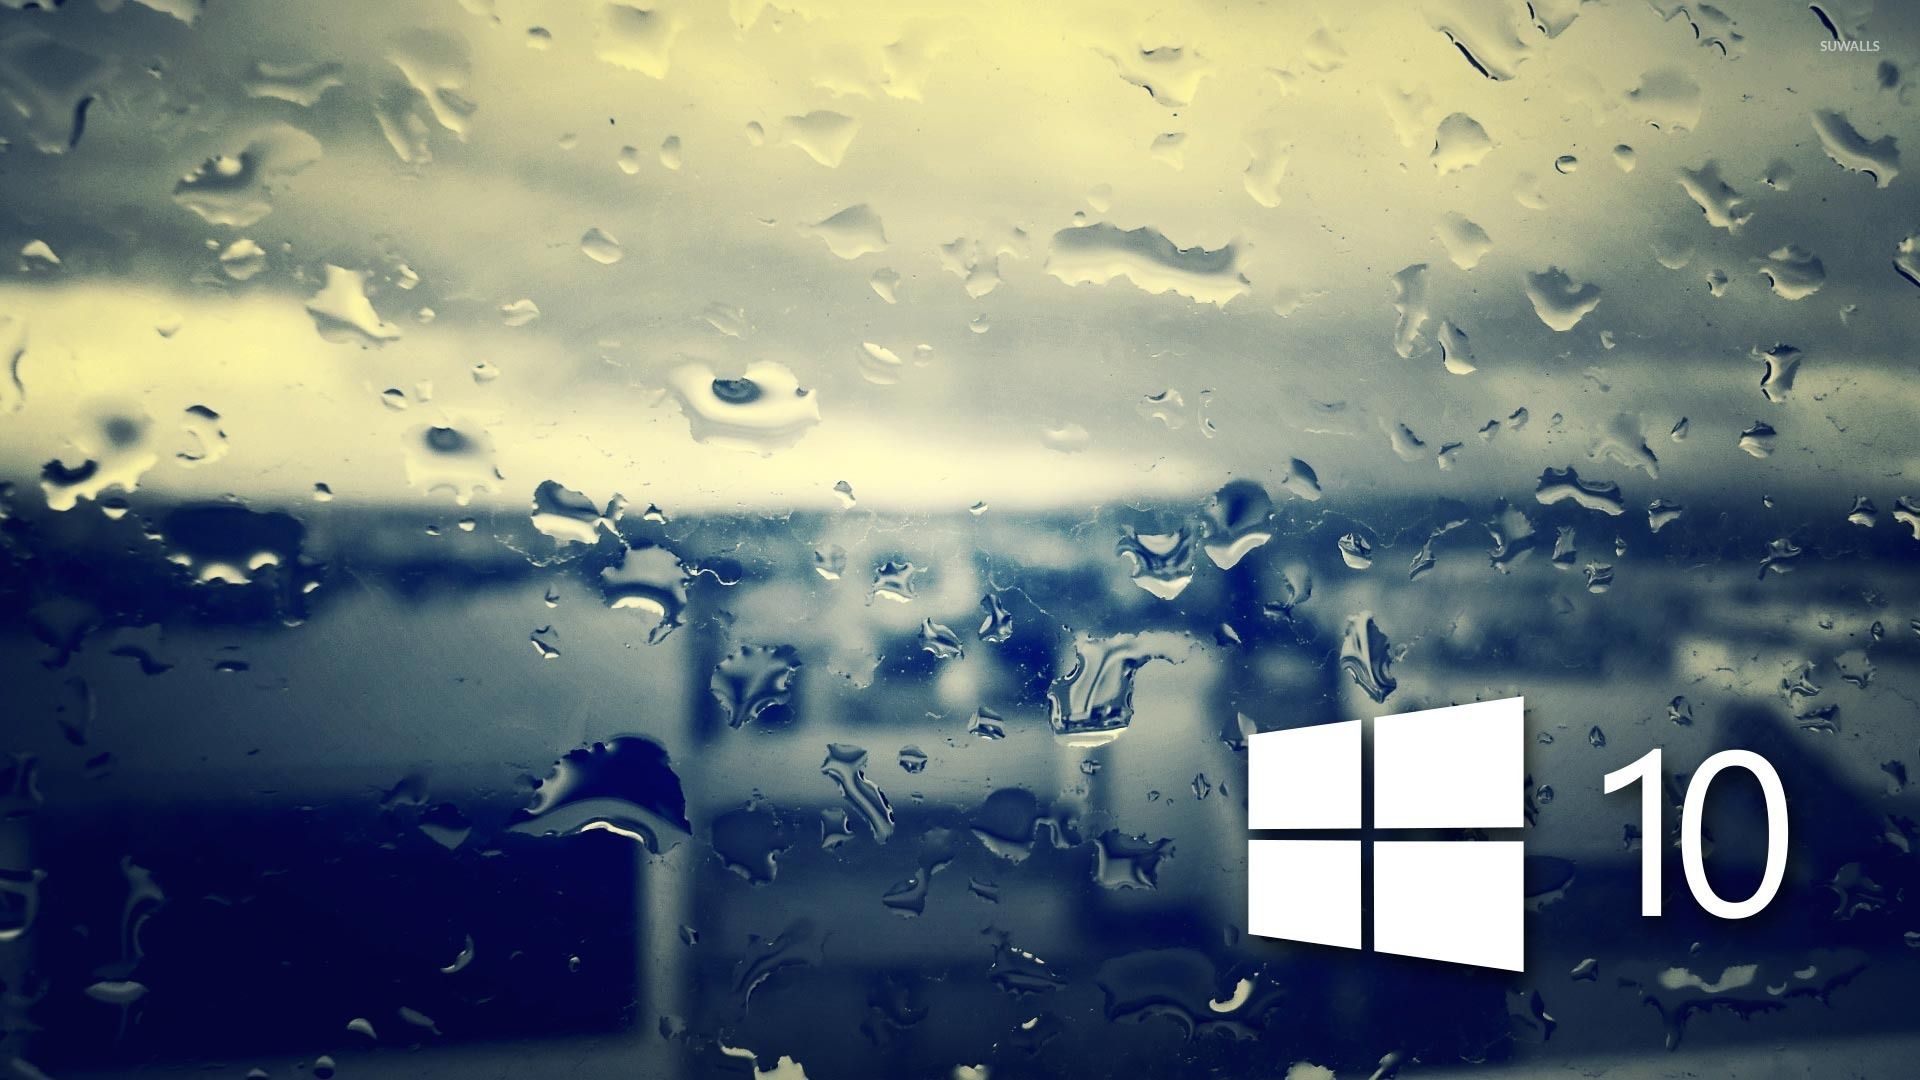 Windows 10 on the rainy window [4] wallpaper wallpaper